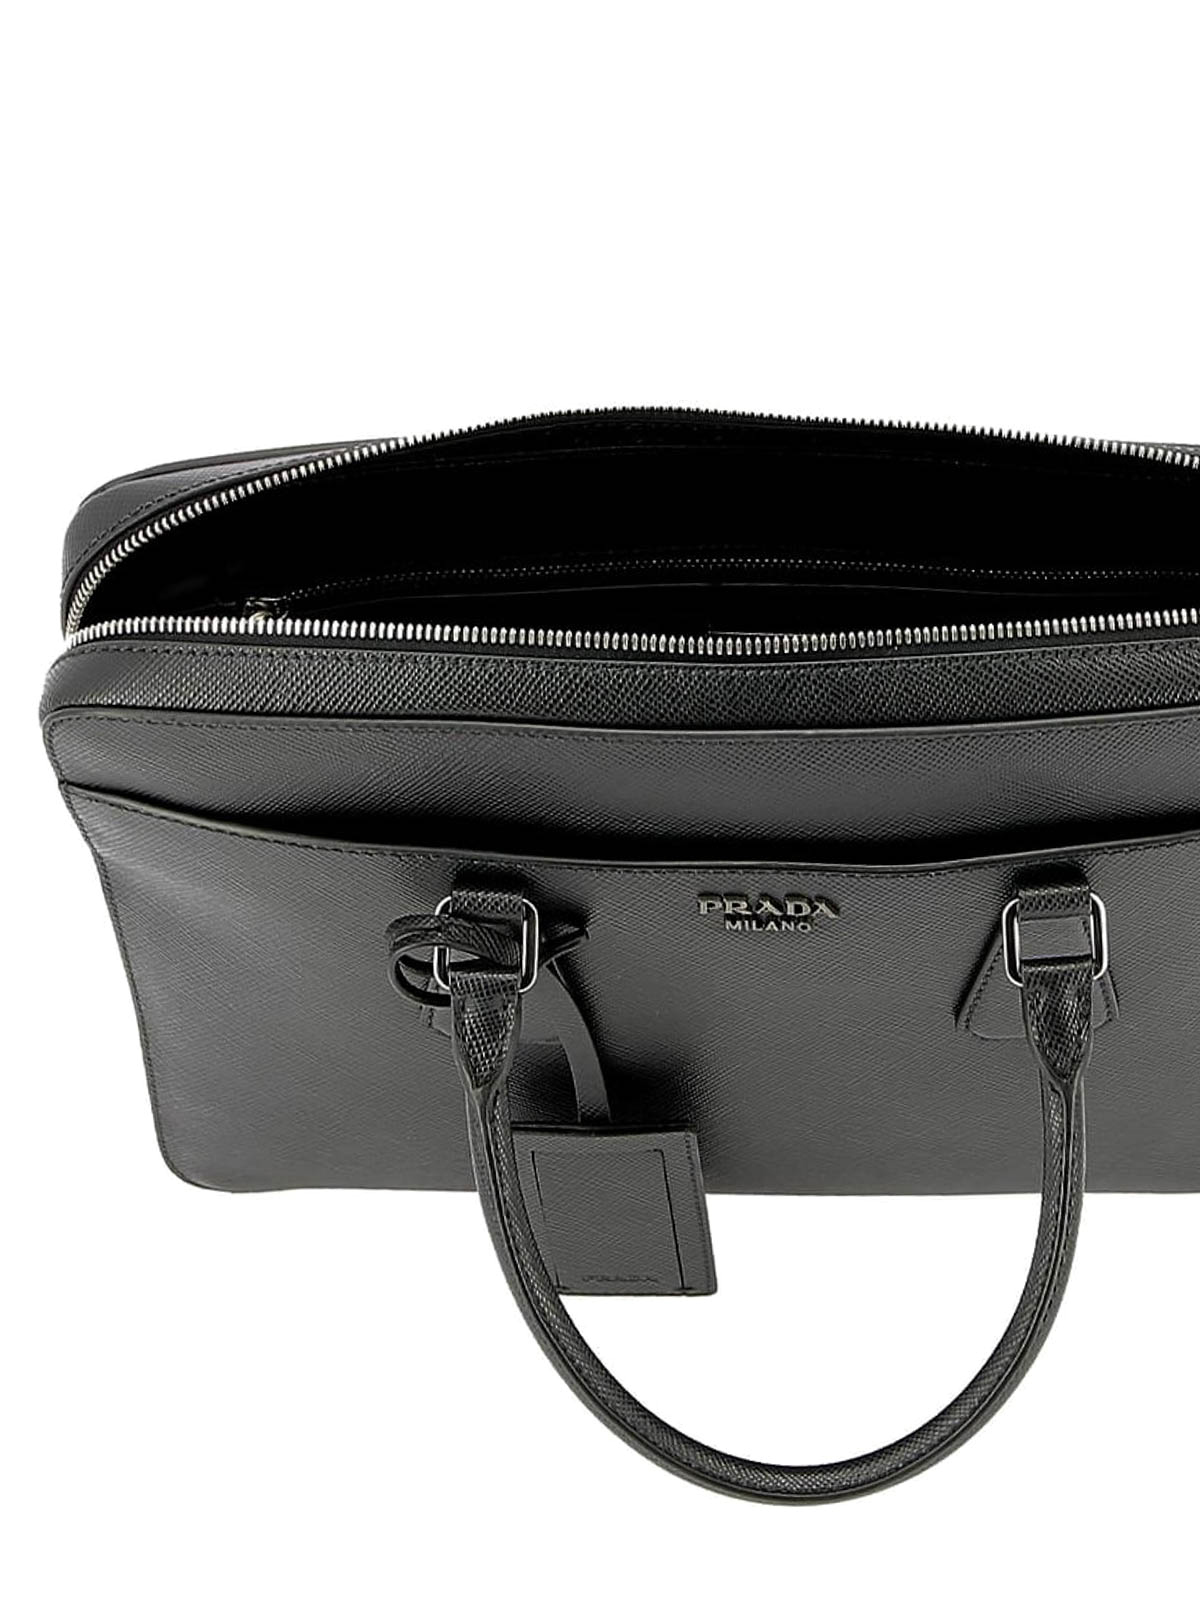 prada leather briefcase